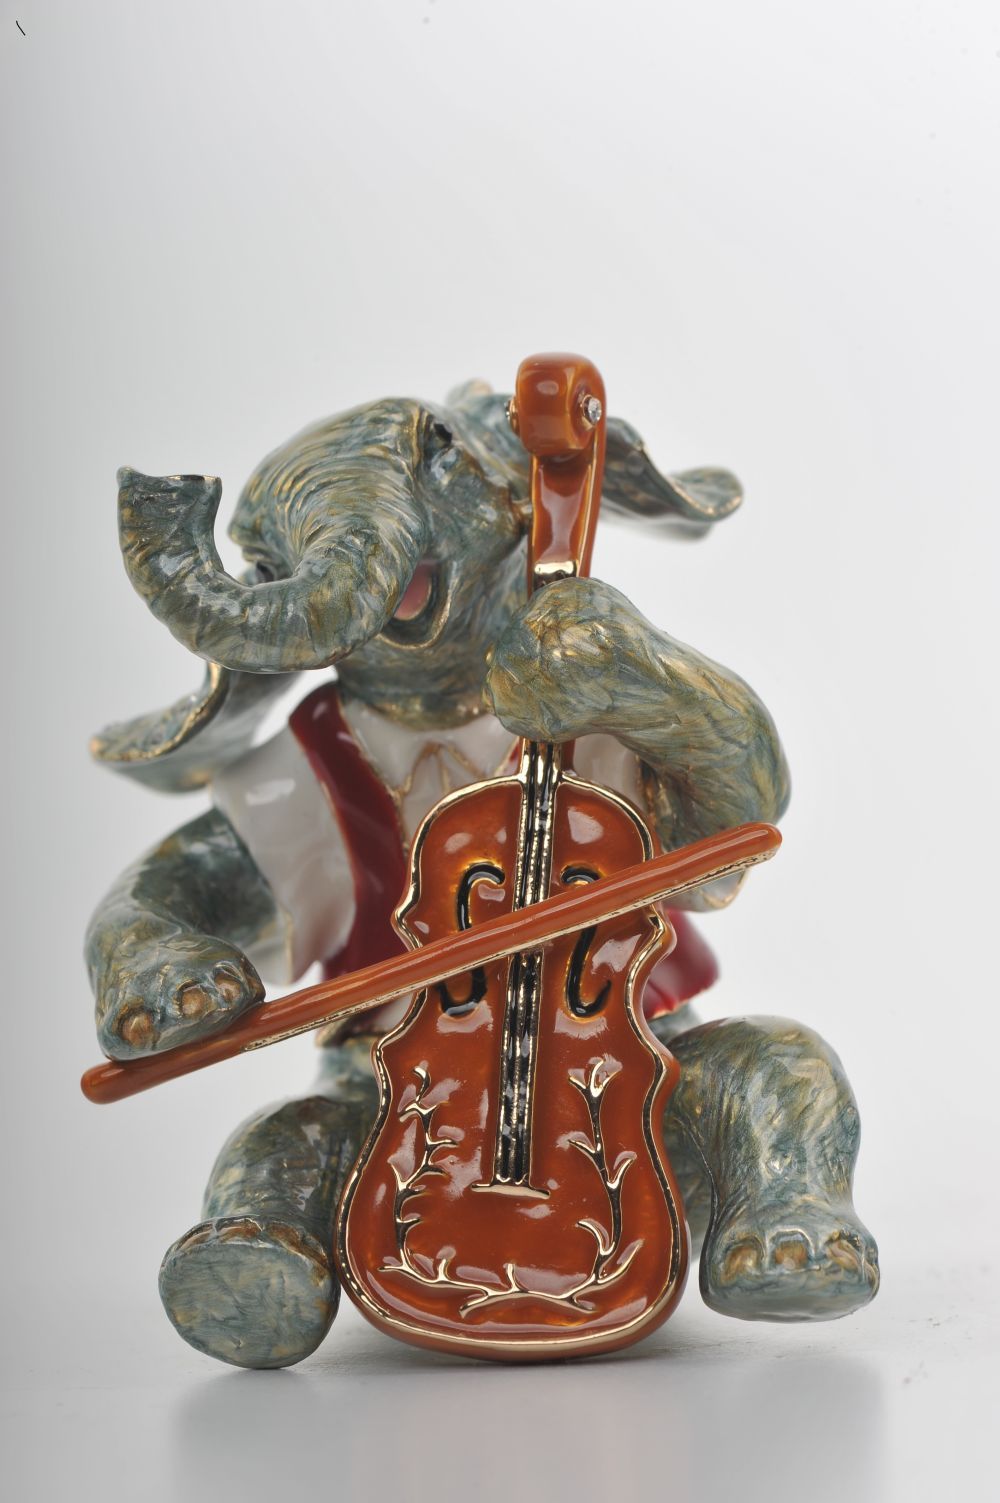 Keren Kopal Elephant Playing the Cello  83.50